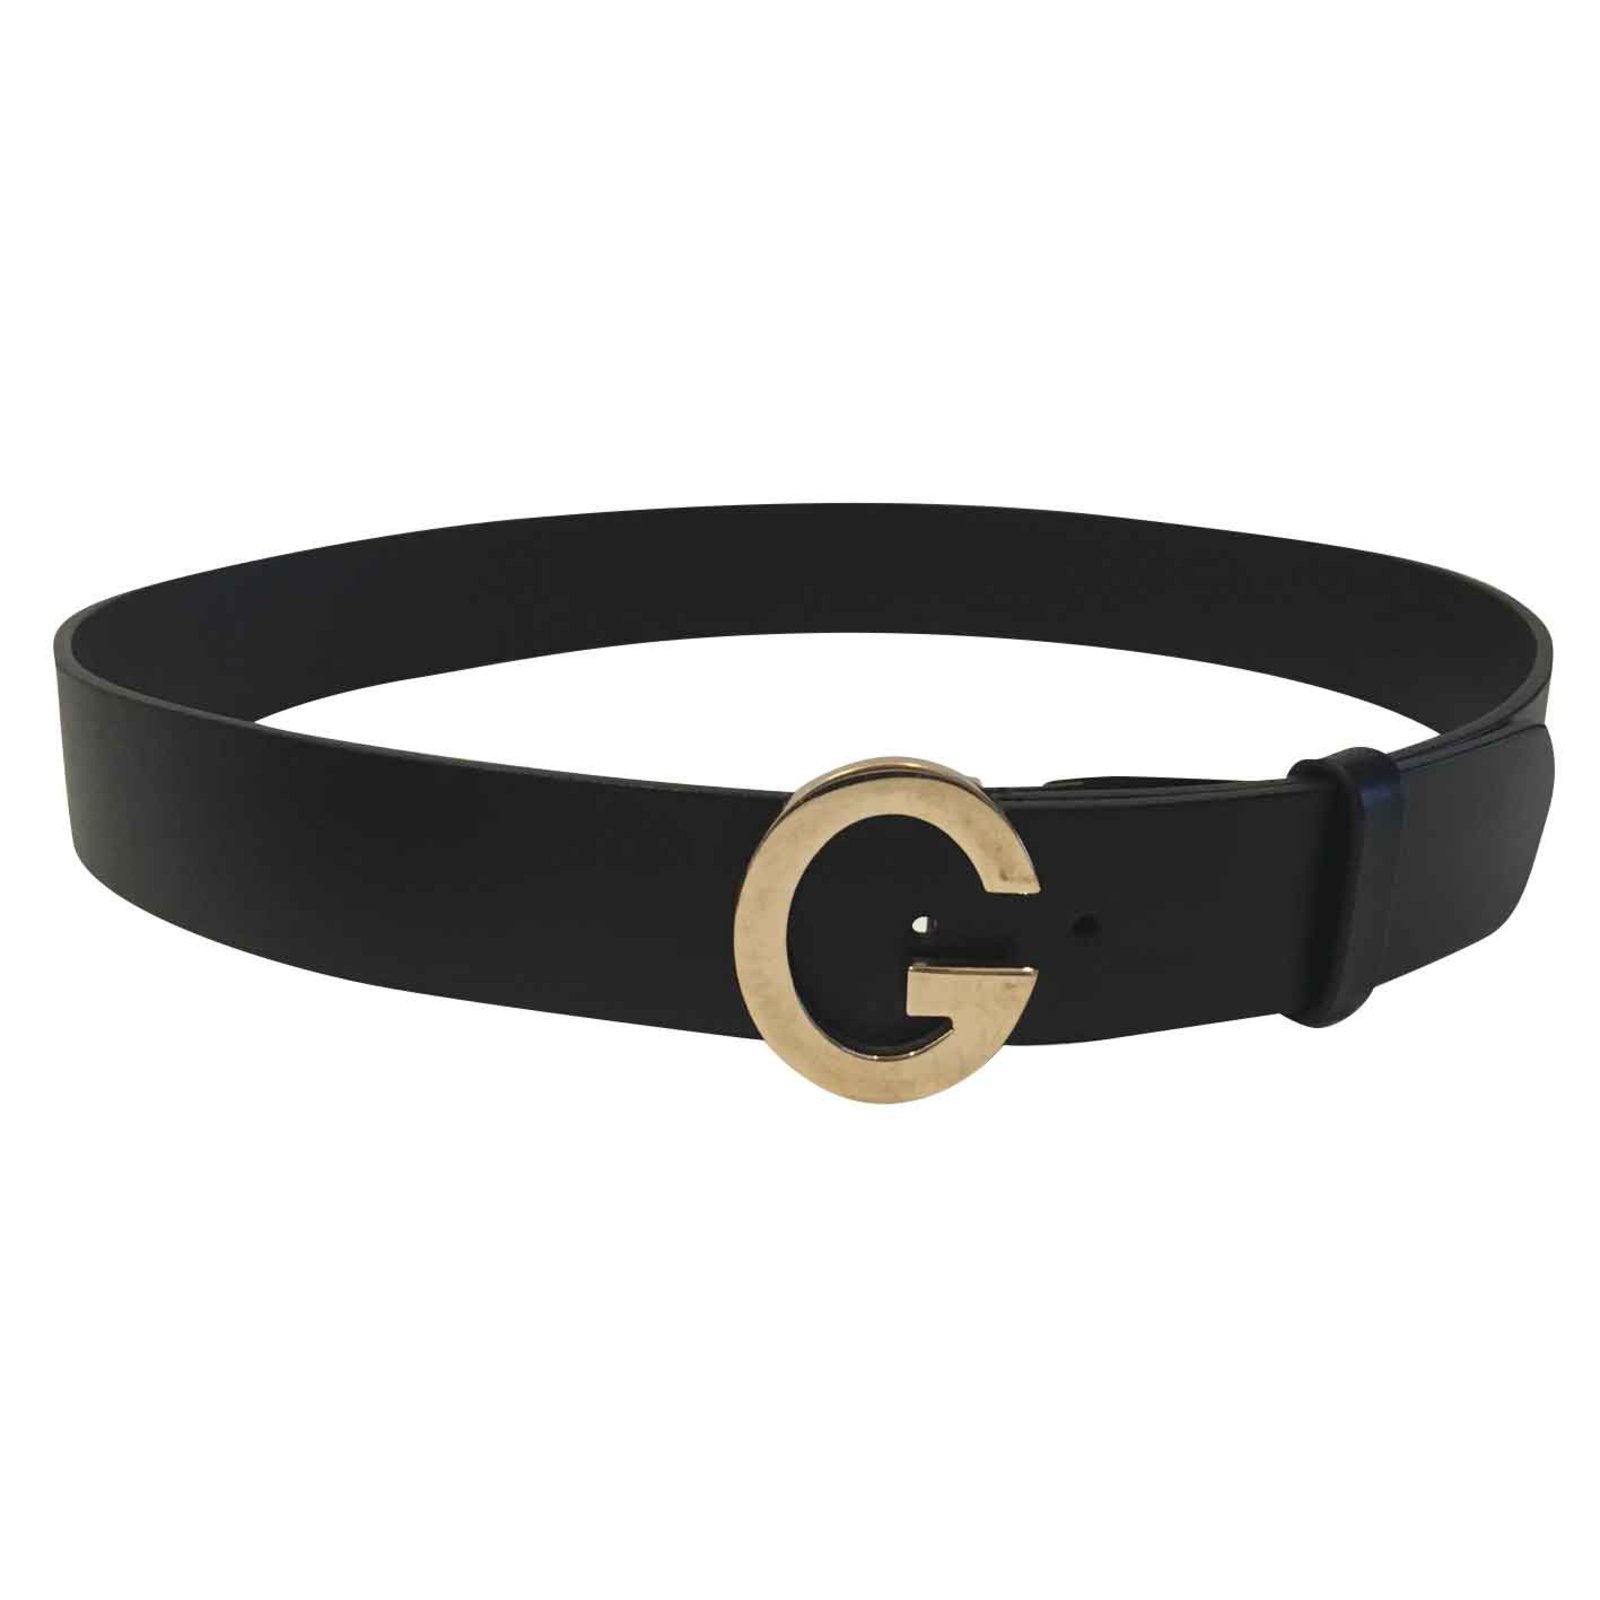 black g gucci belt